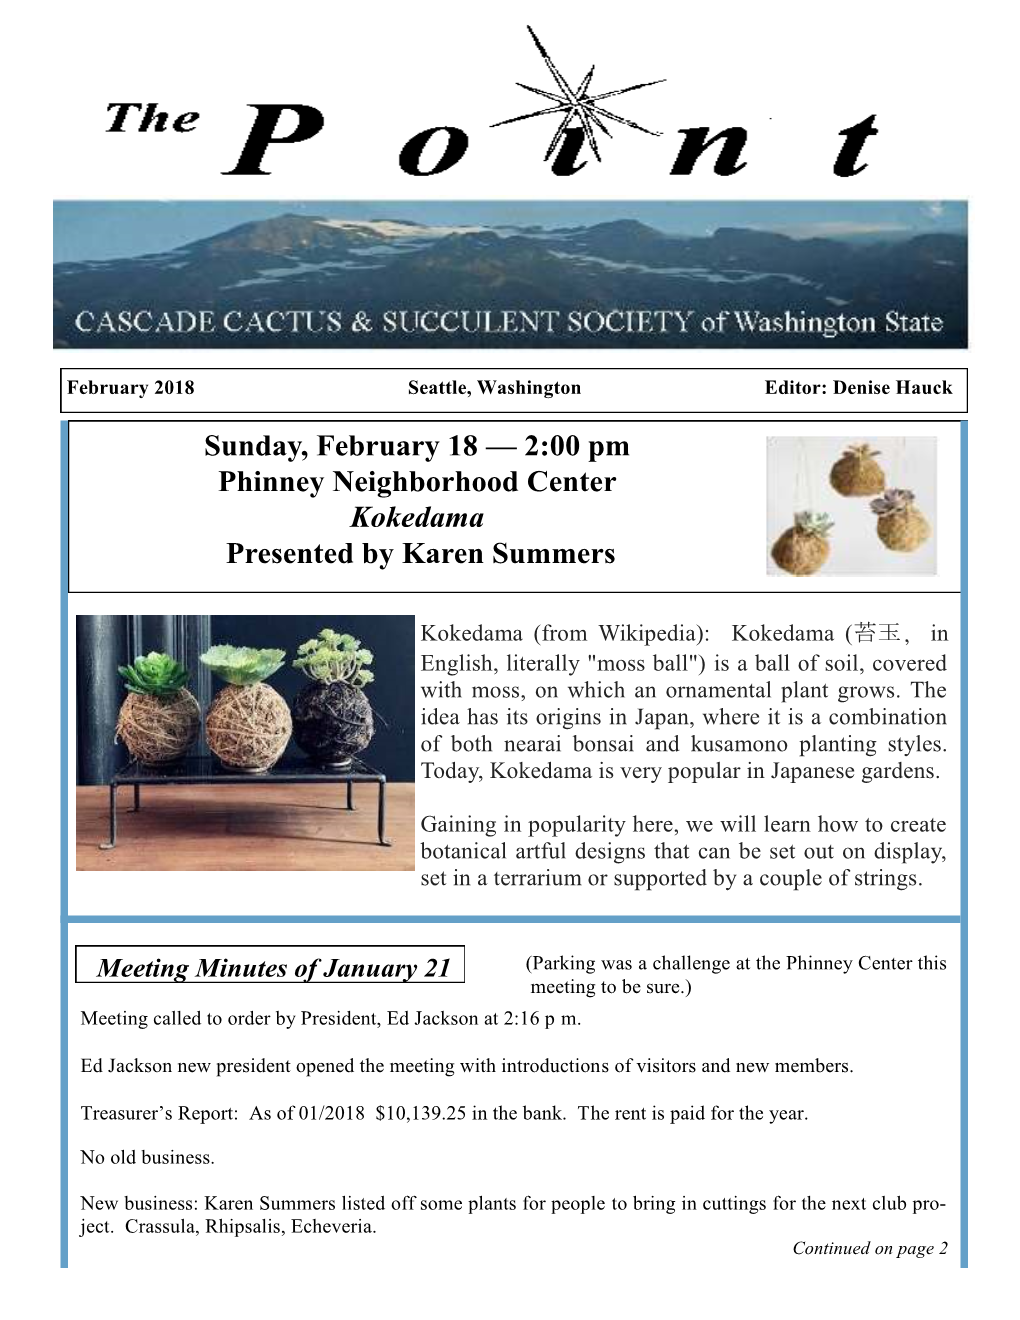 Sunday, February 18 — 2:00 Pm Phinney Neighborhood Center